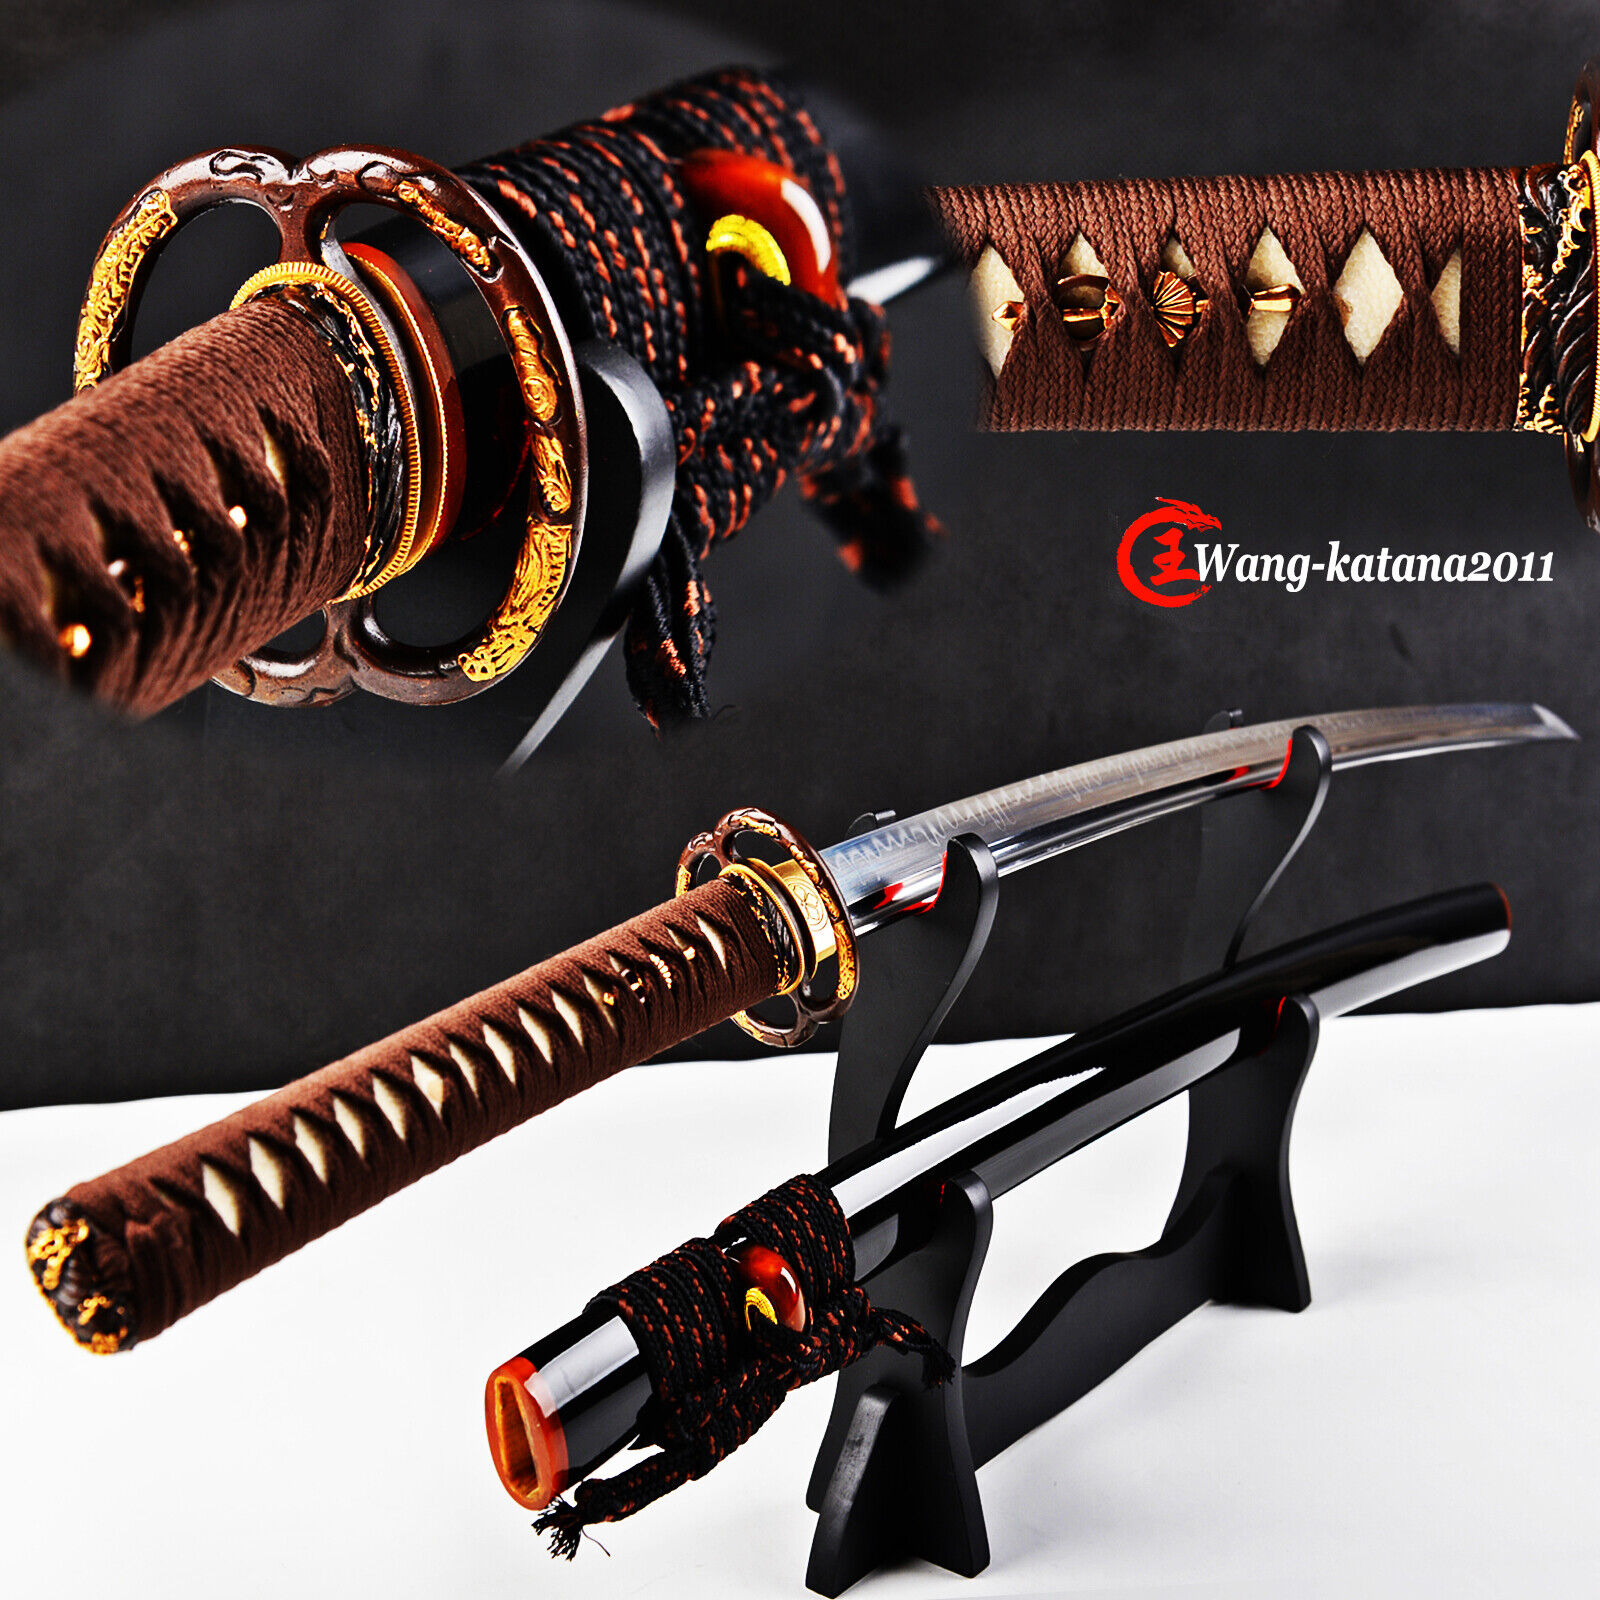 Real 18K Gold Musashi Clay Tempered T10 Katana Handmade Japanese Samurai Sword 